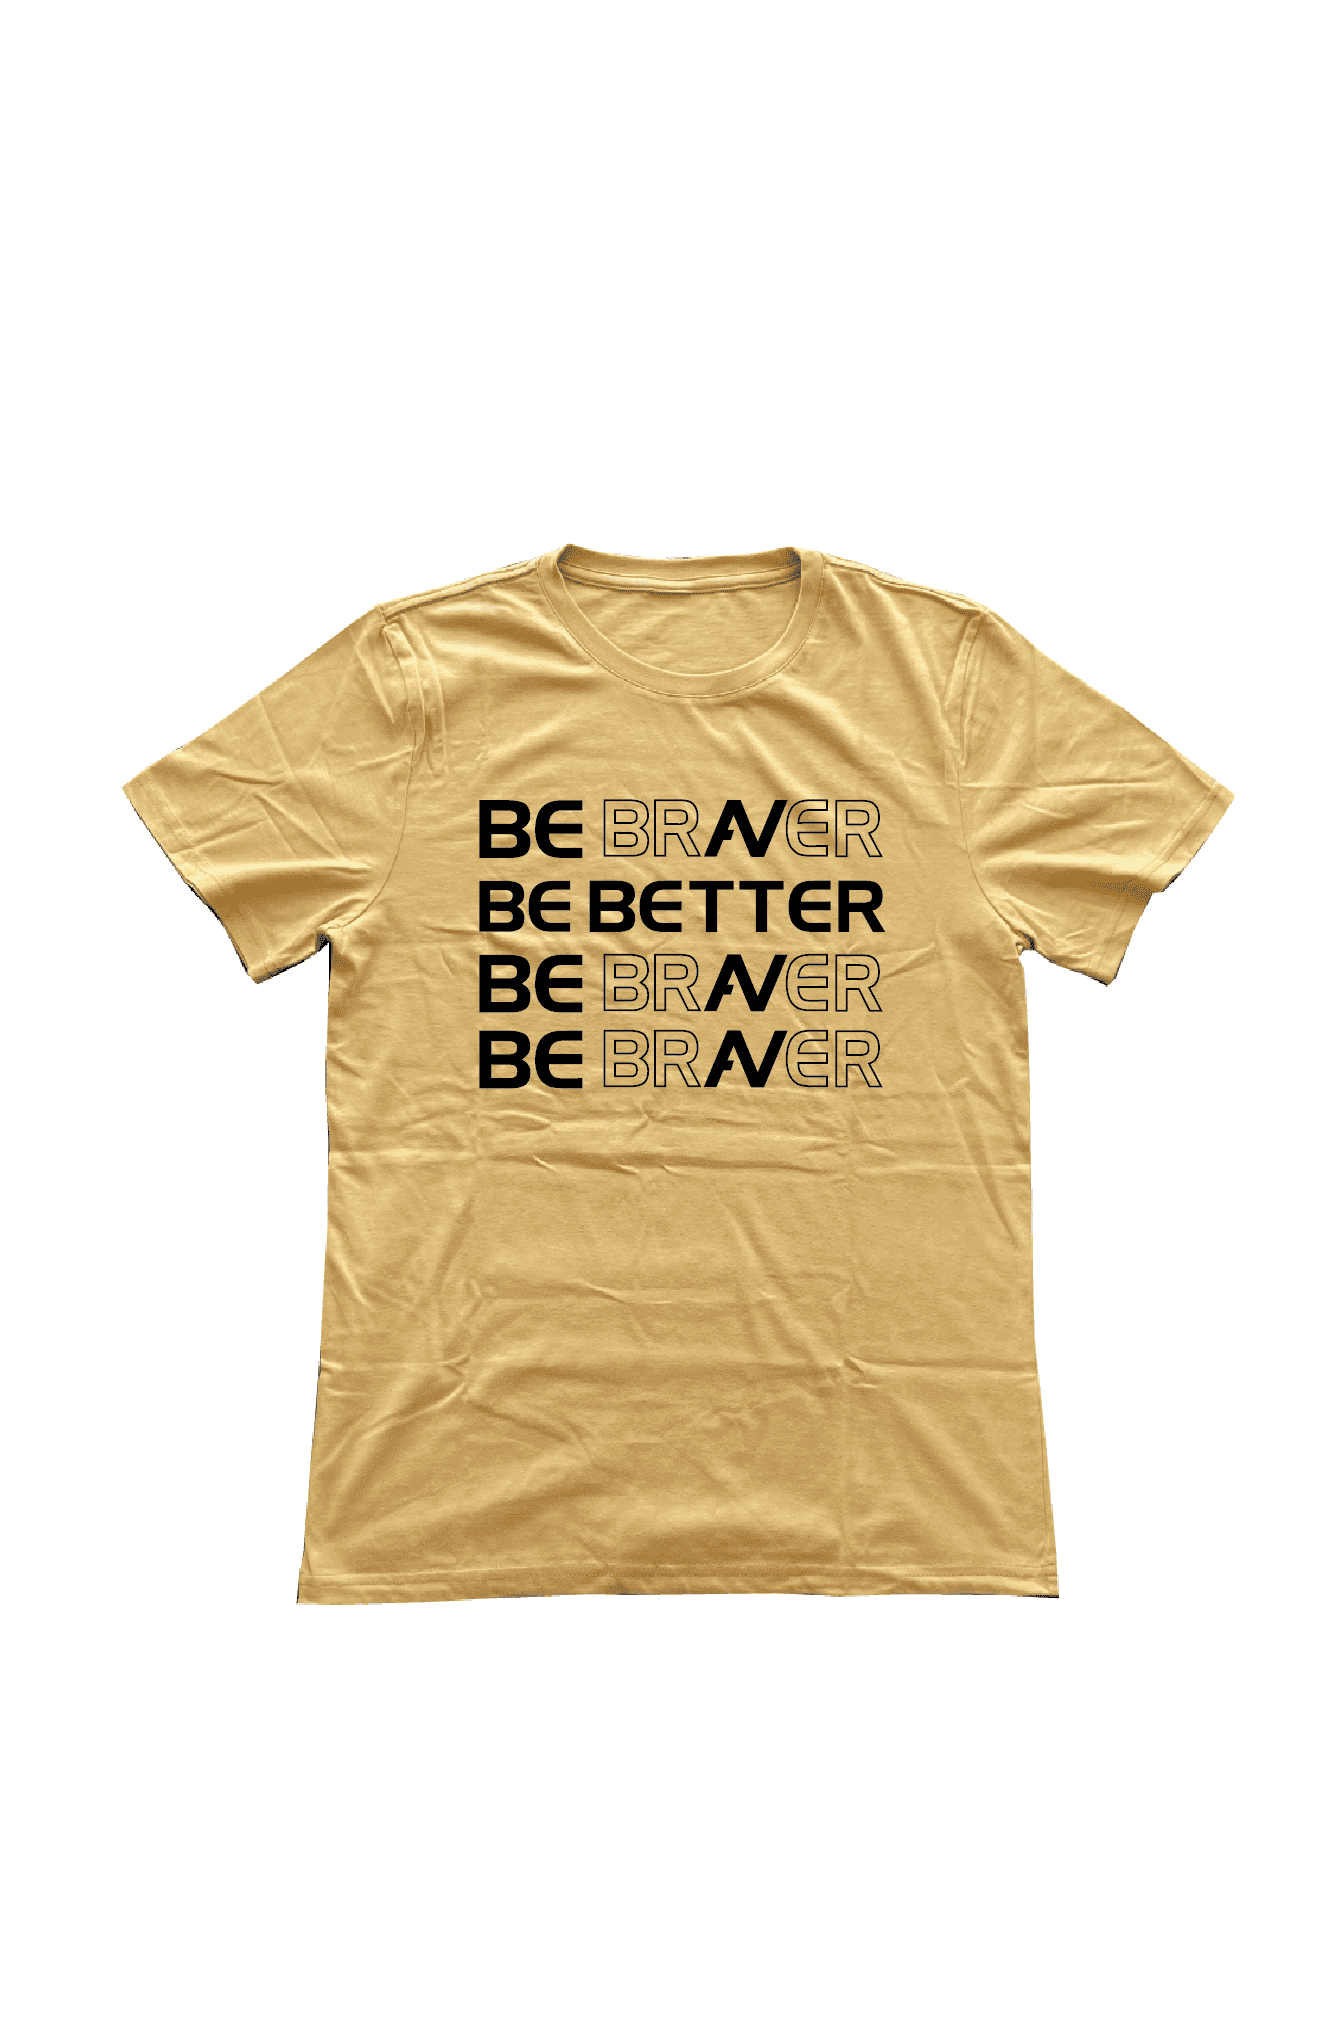 Be Better print on mustard t-shirt